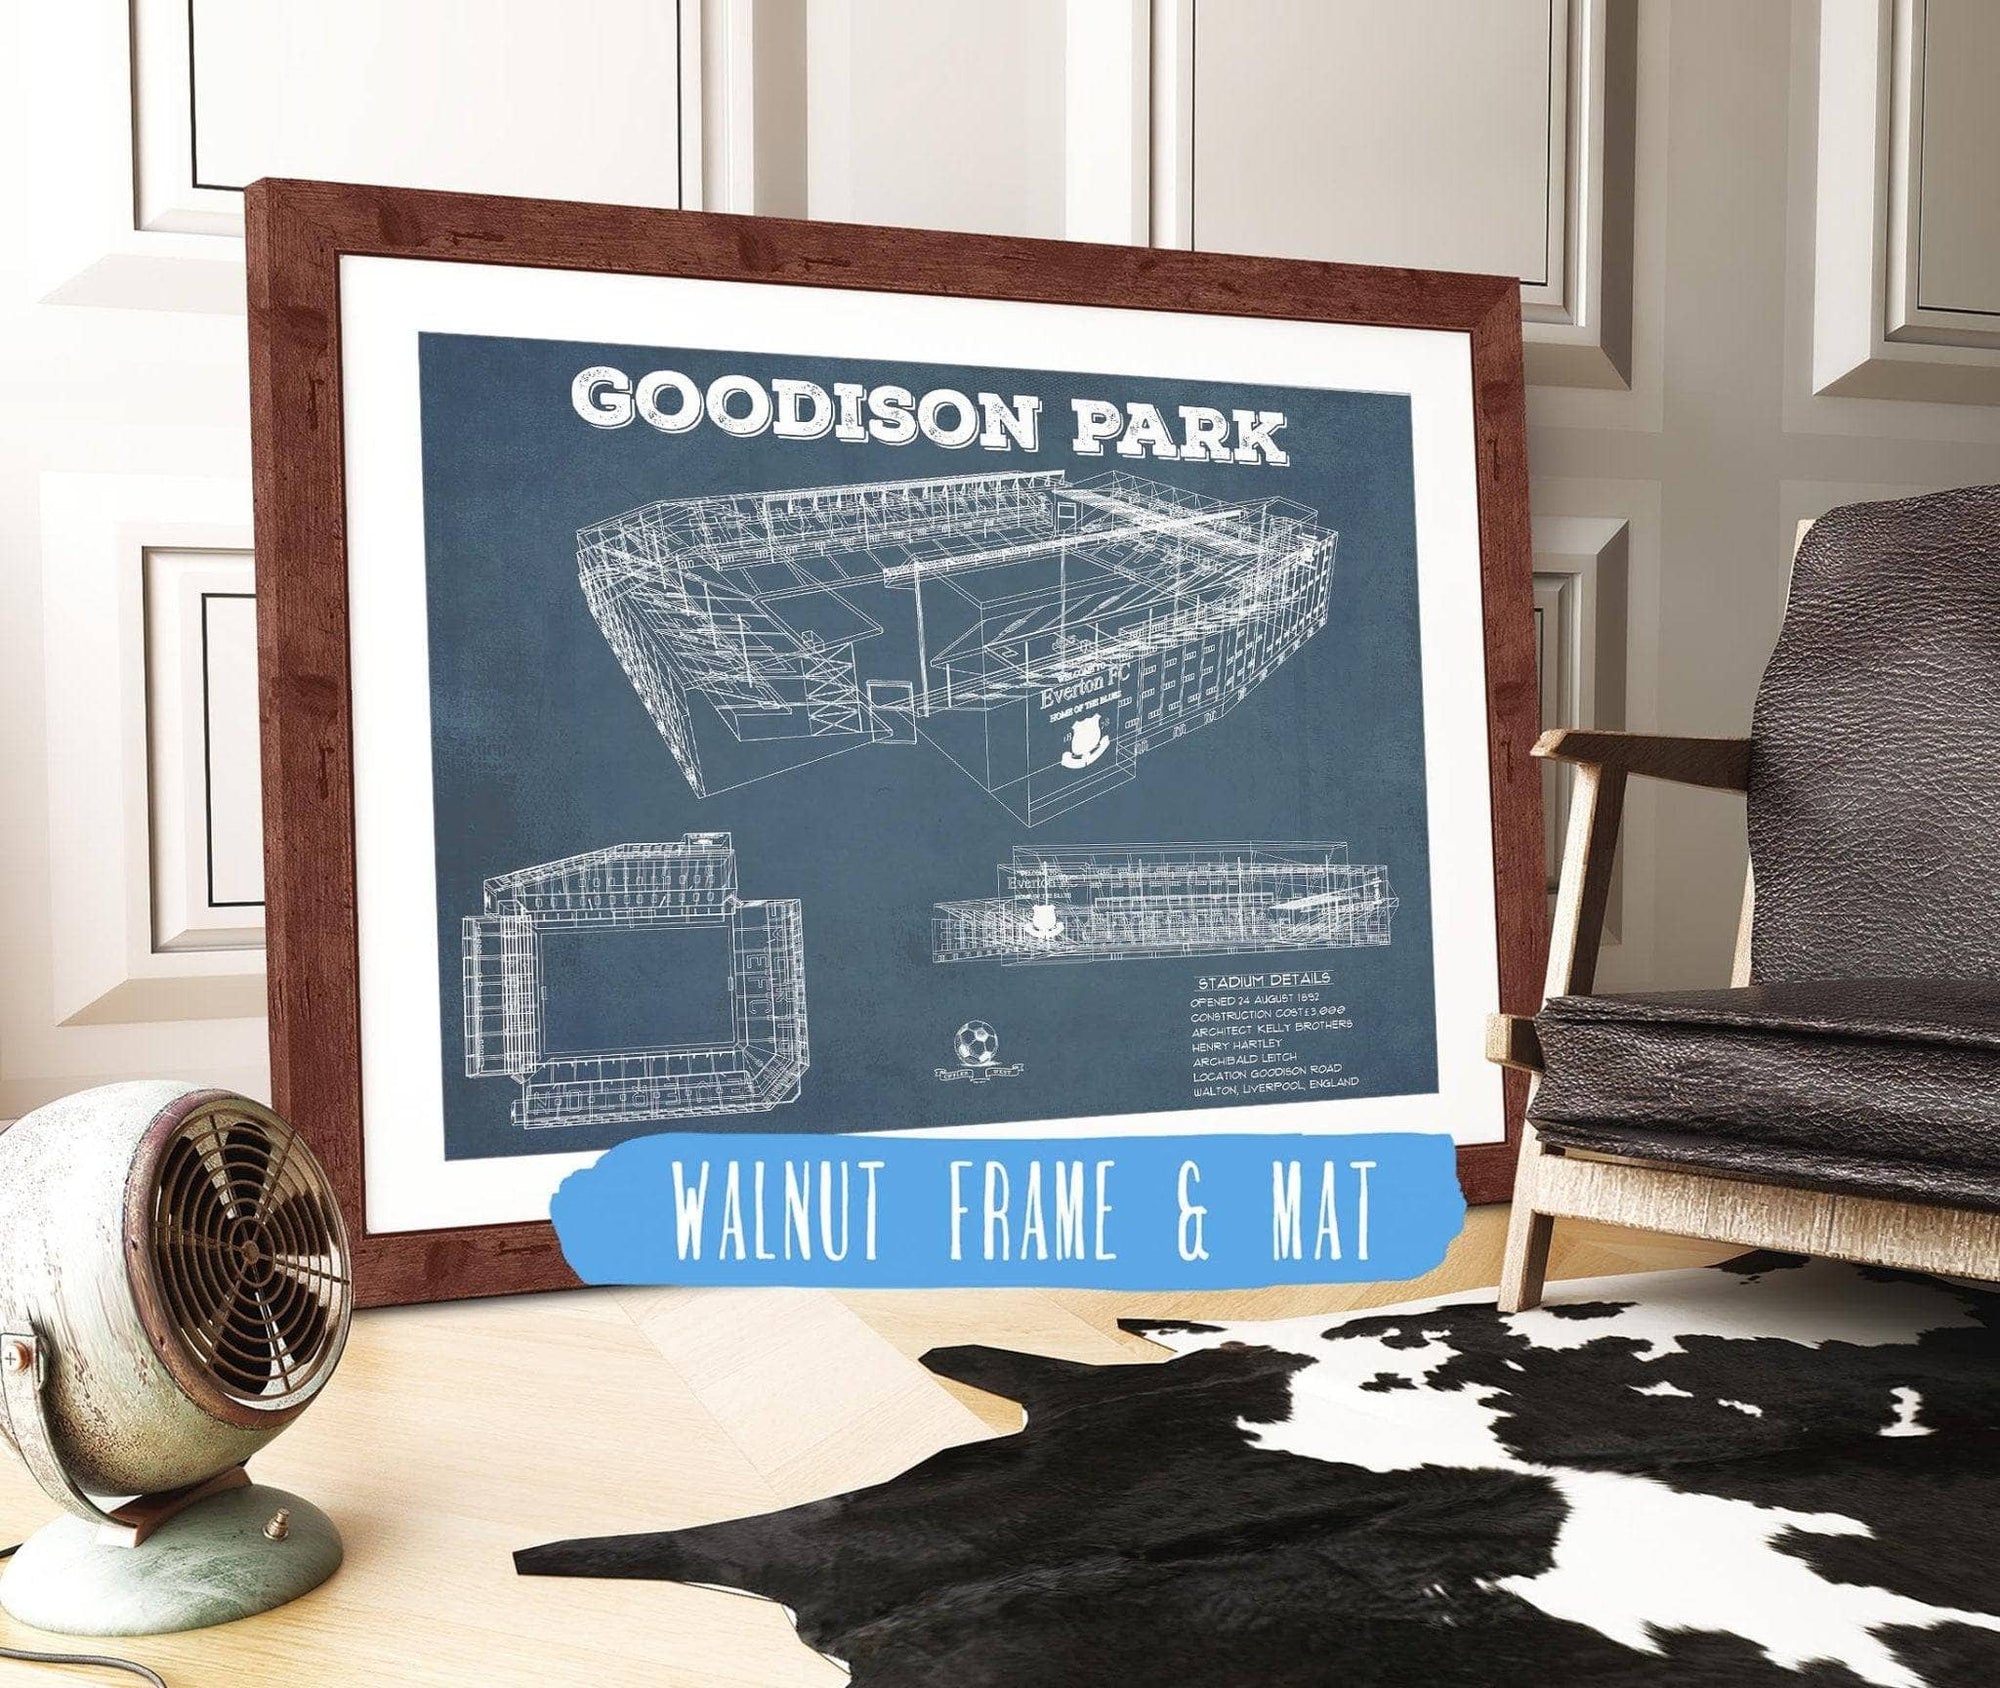 Cutler West Soccer Collection 14" x 11" / Walnut Frame & Mat Everton Football Club - Vintage Goodison Park Soccer Print 722908504-TOP